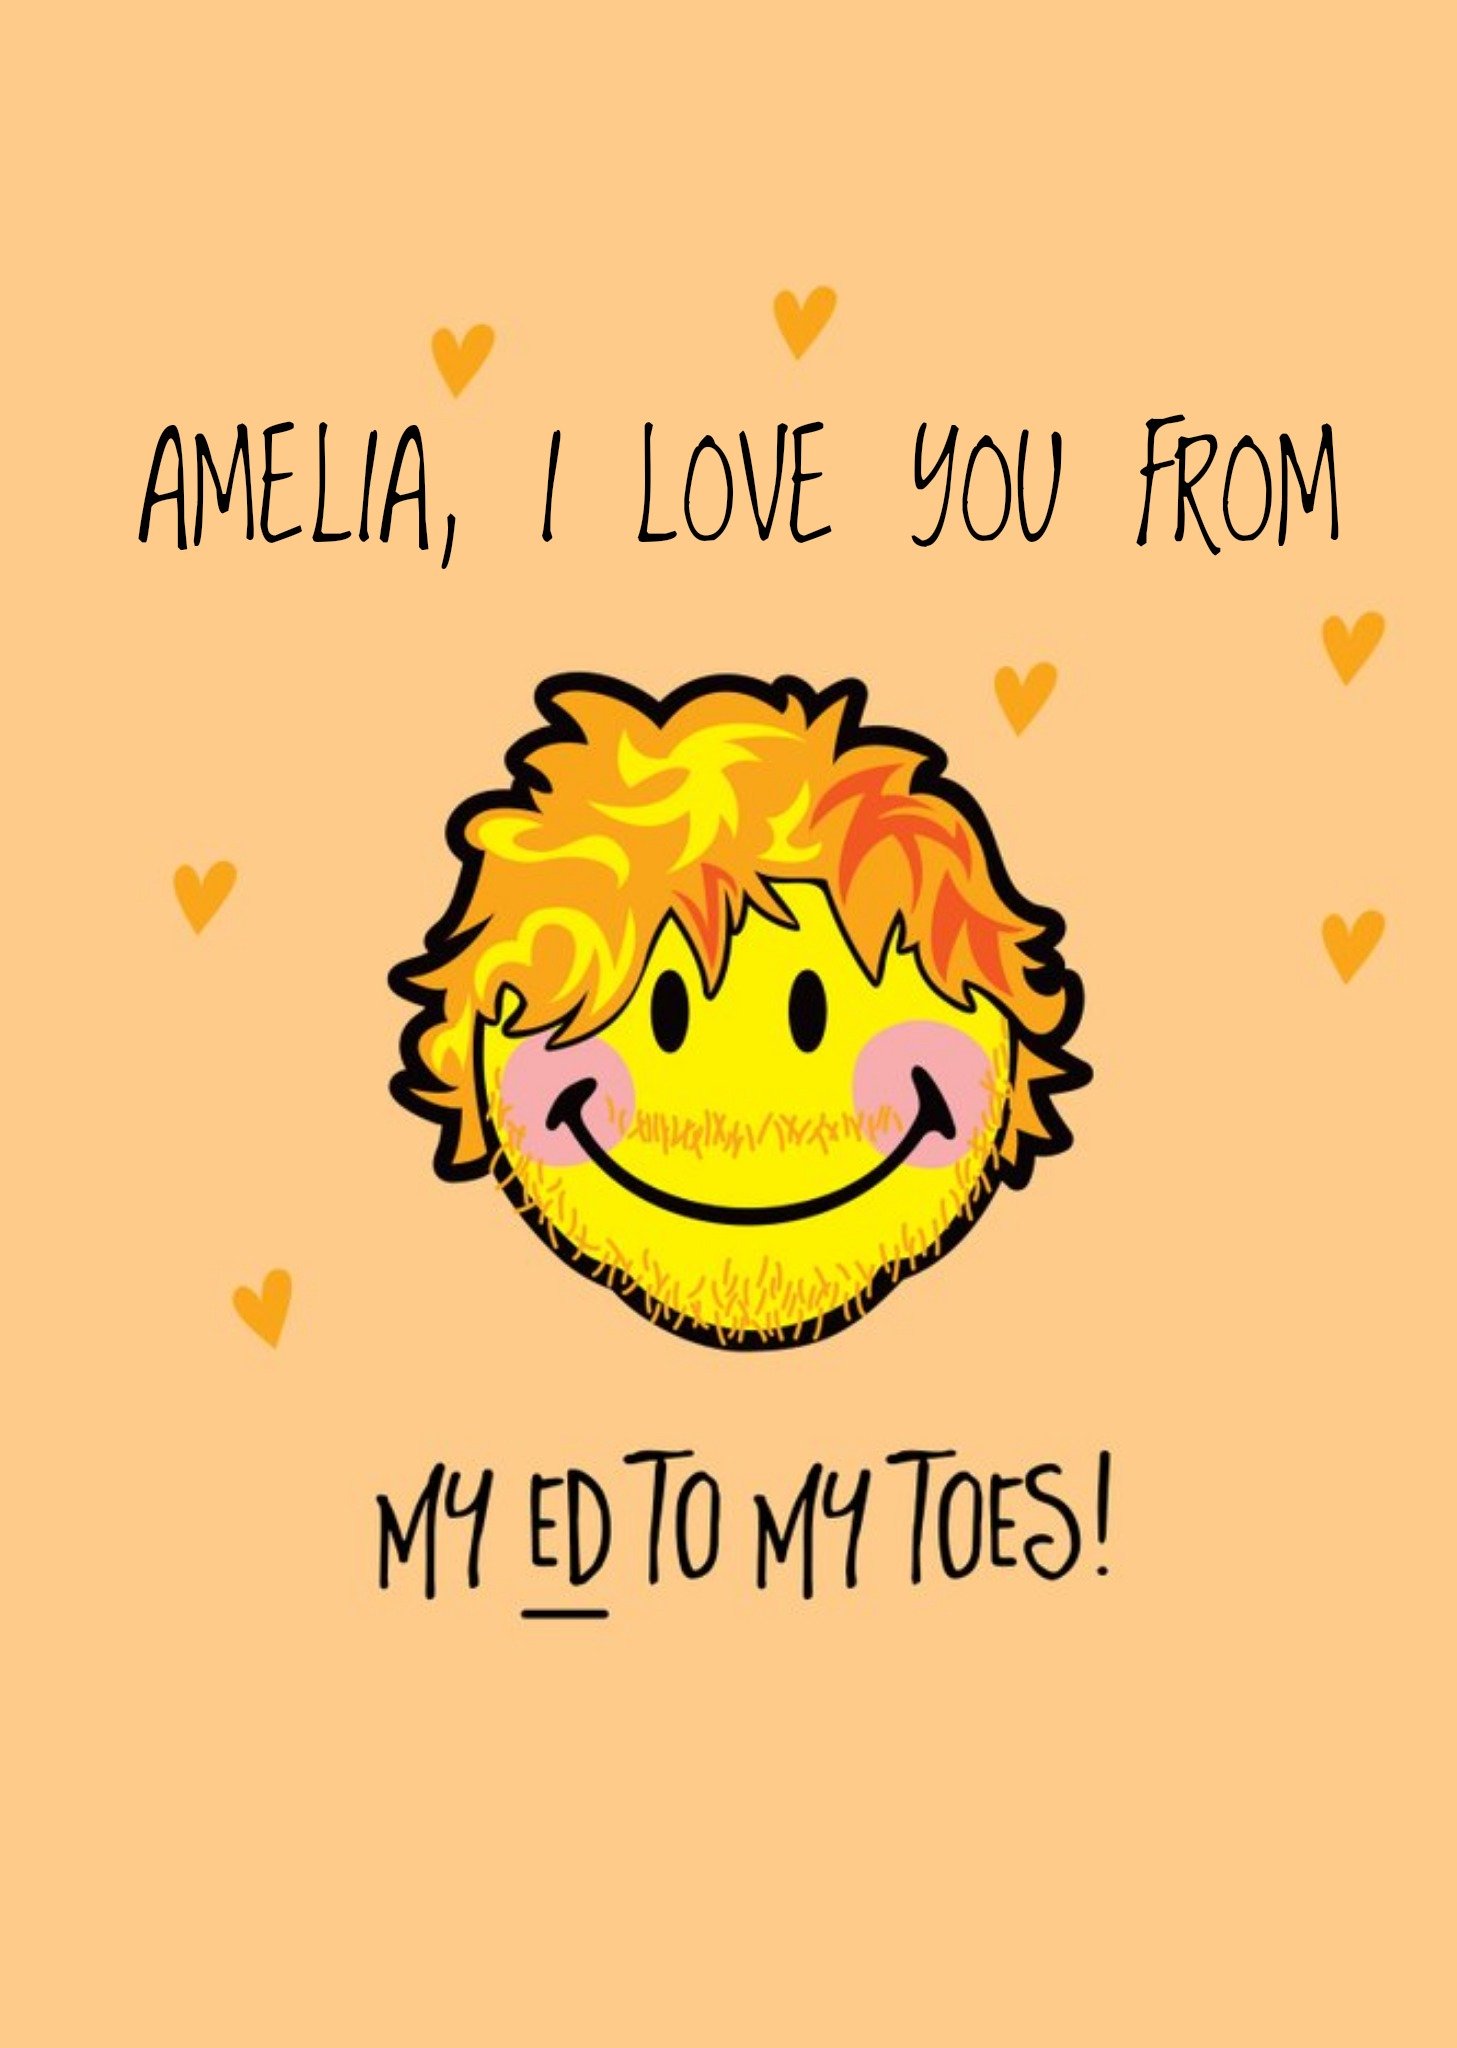 Moonpig Smiley World - My Ed To My Toes - Ed Sheeran Birthday Card Ecard